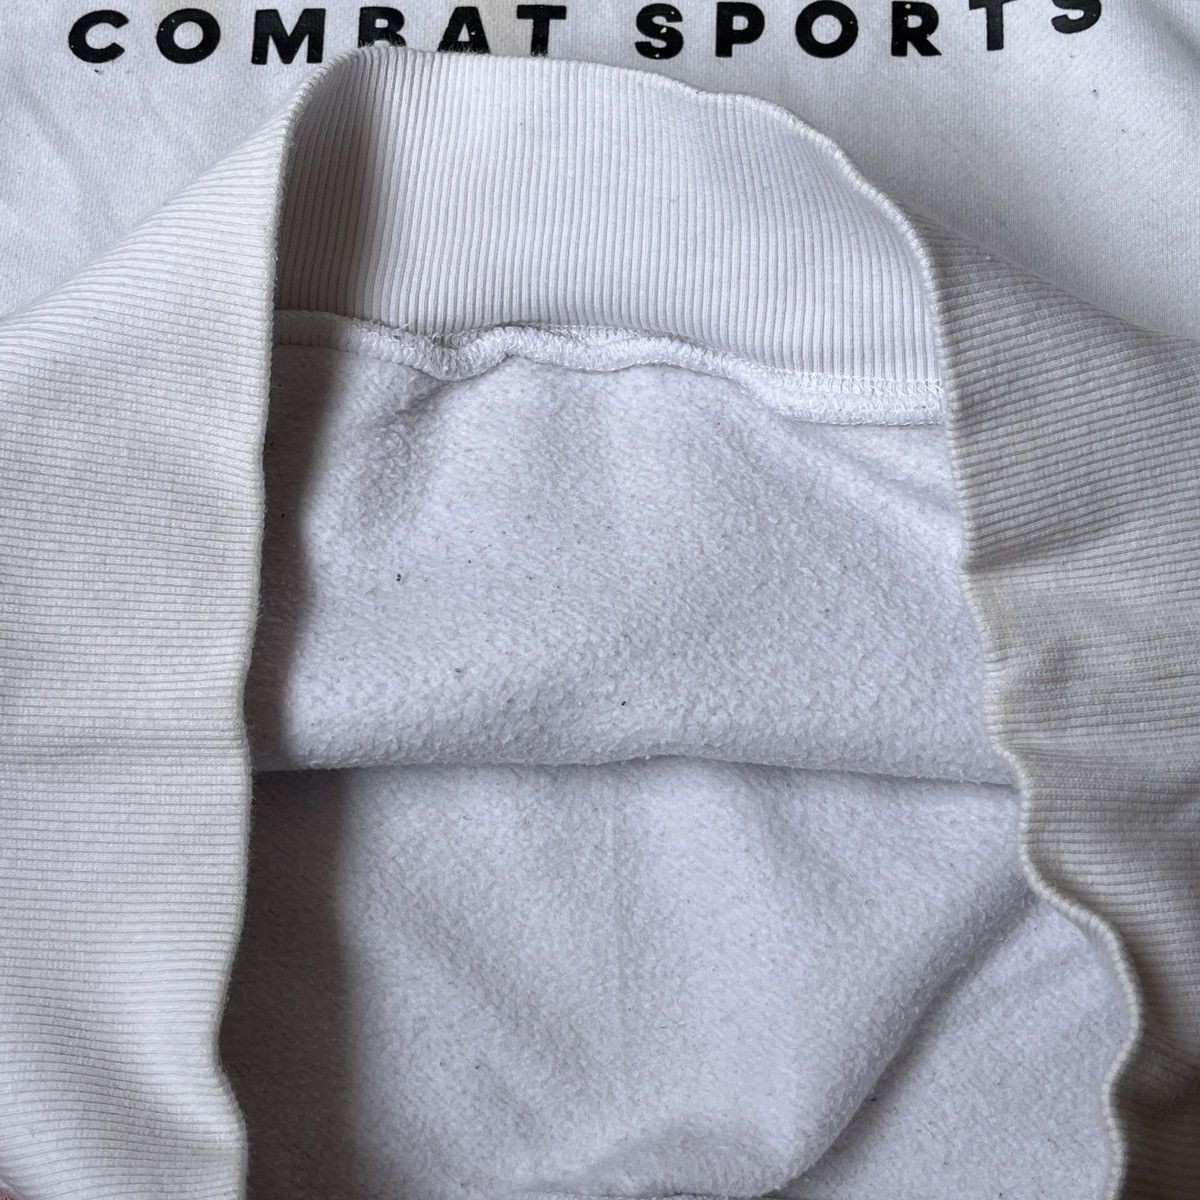 Adidas Combat Sports Sweatshirts Hoodie - 13